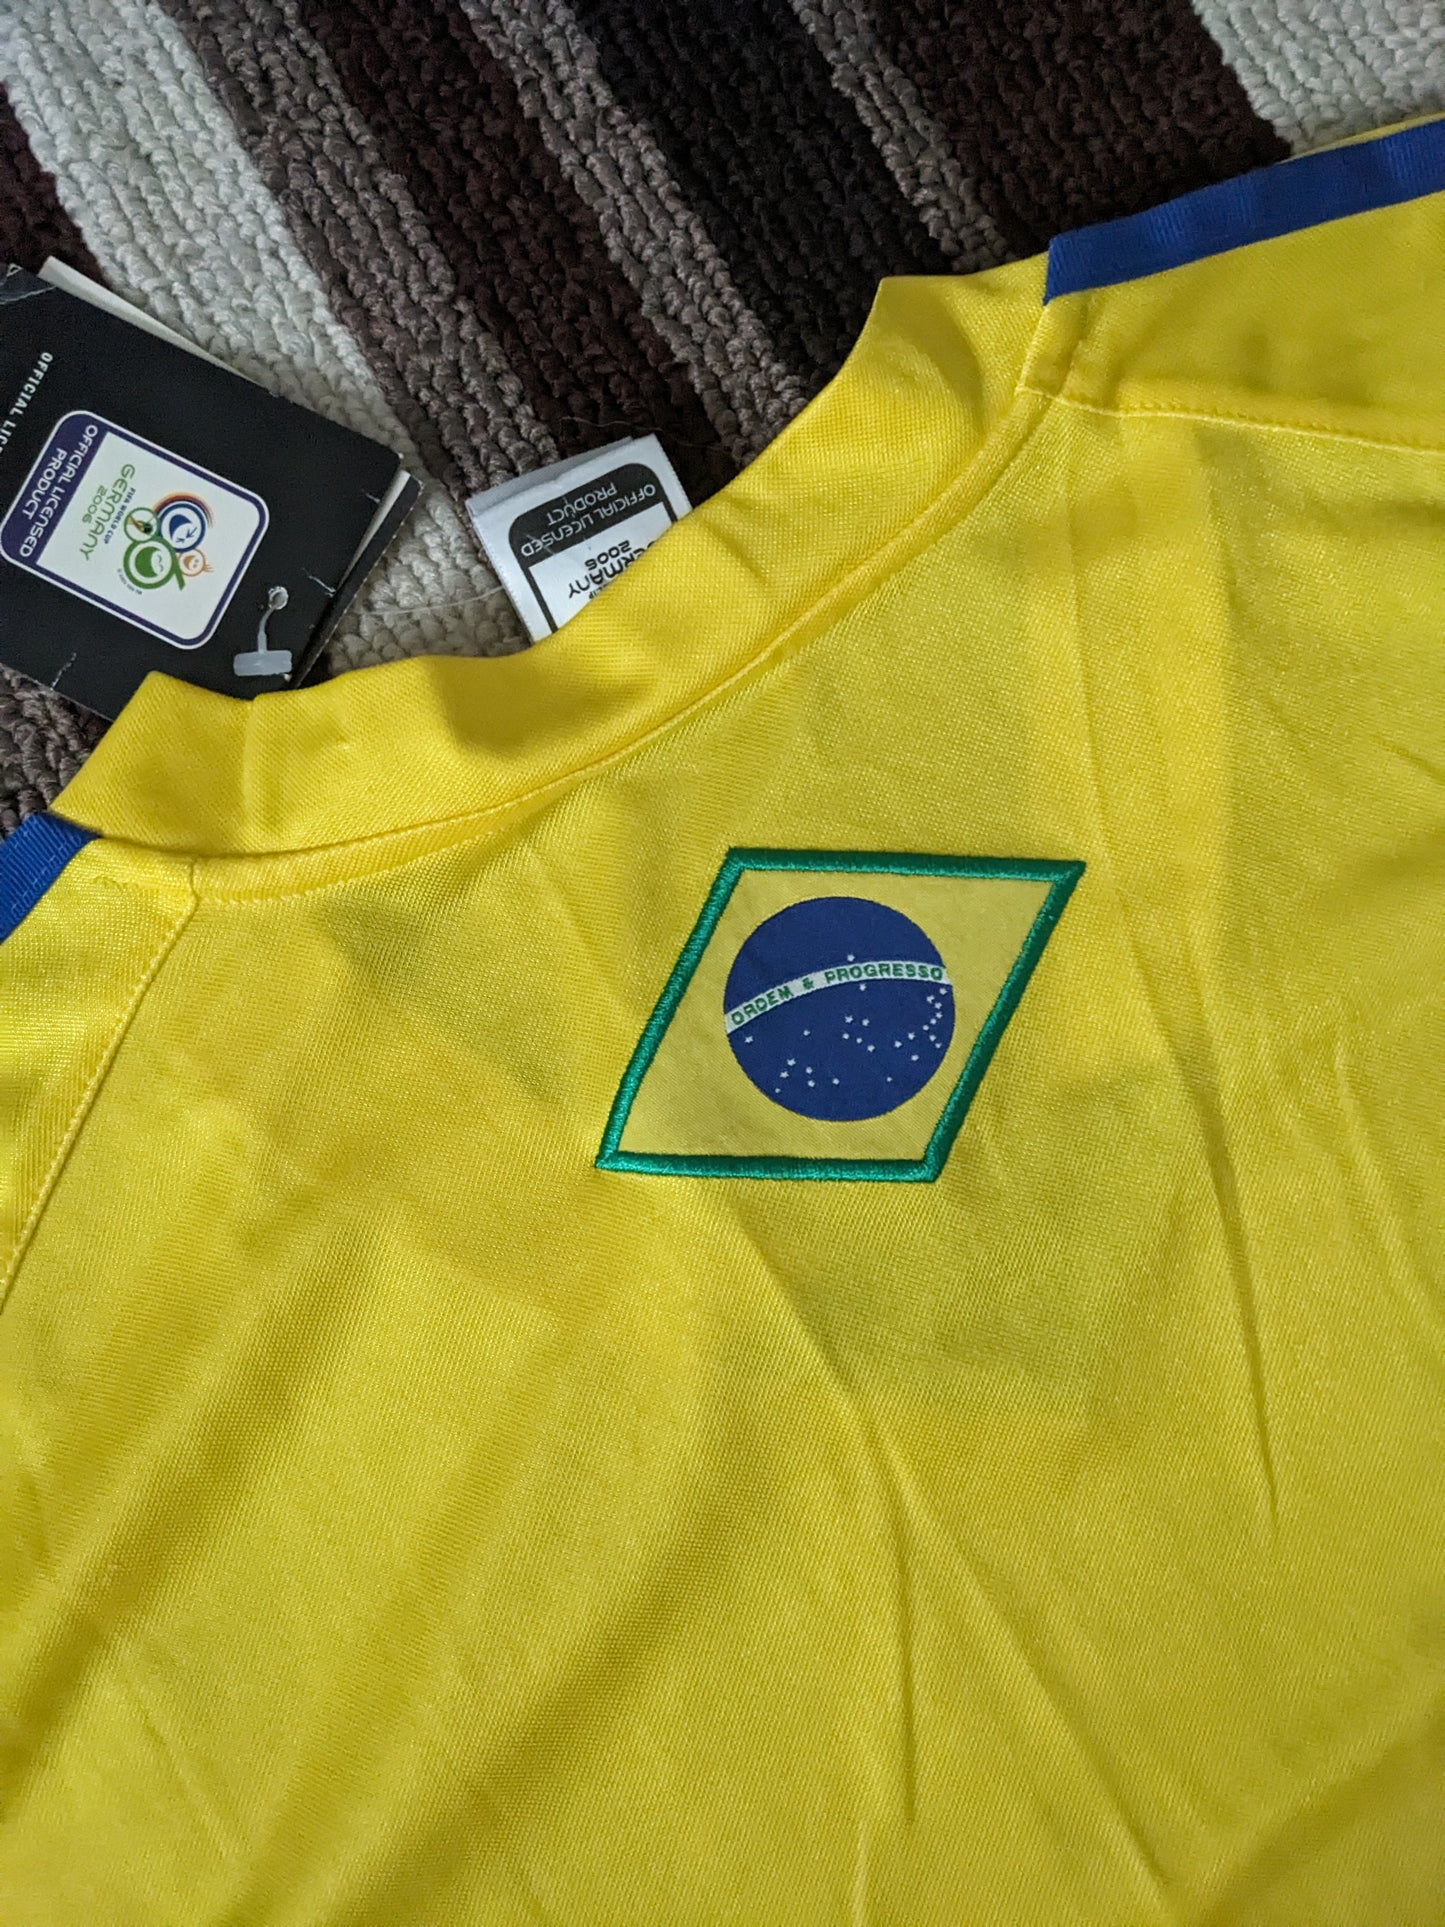 Brazil 2006 FIFA World Cup Germany (XXL)